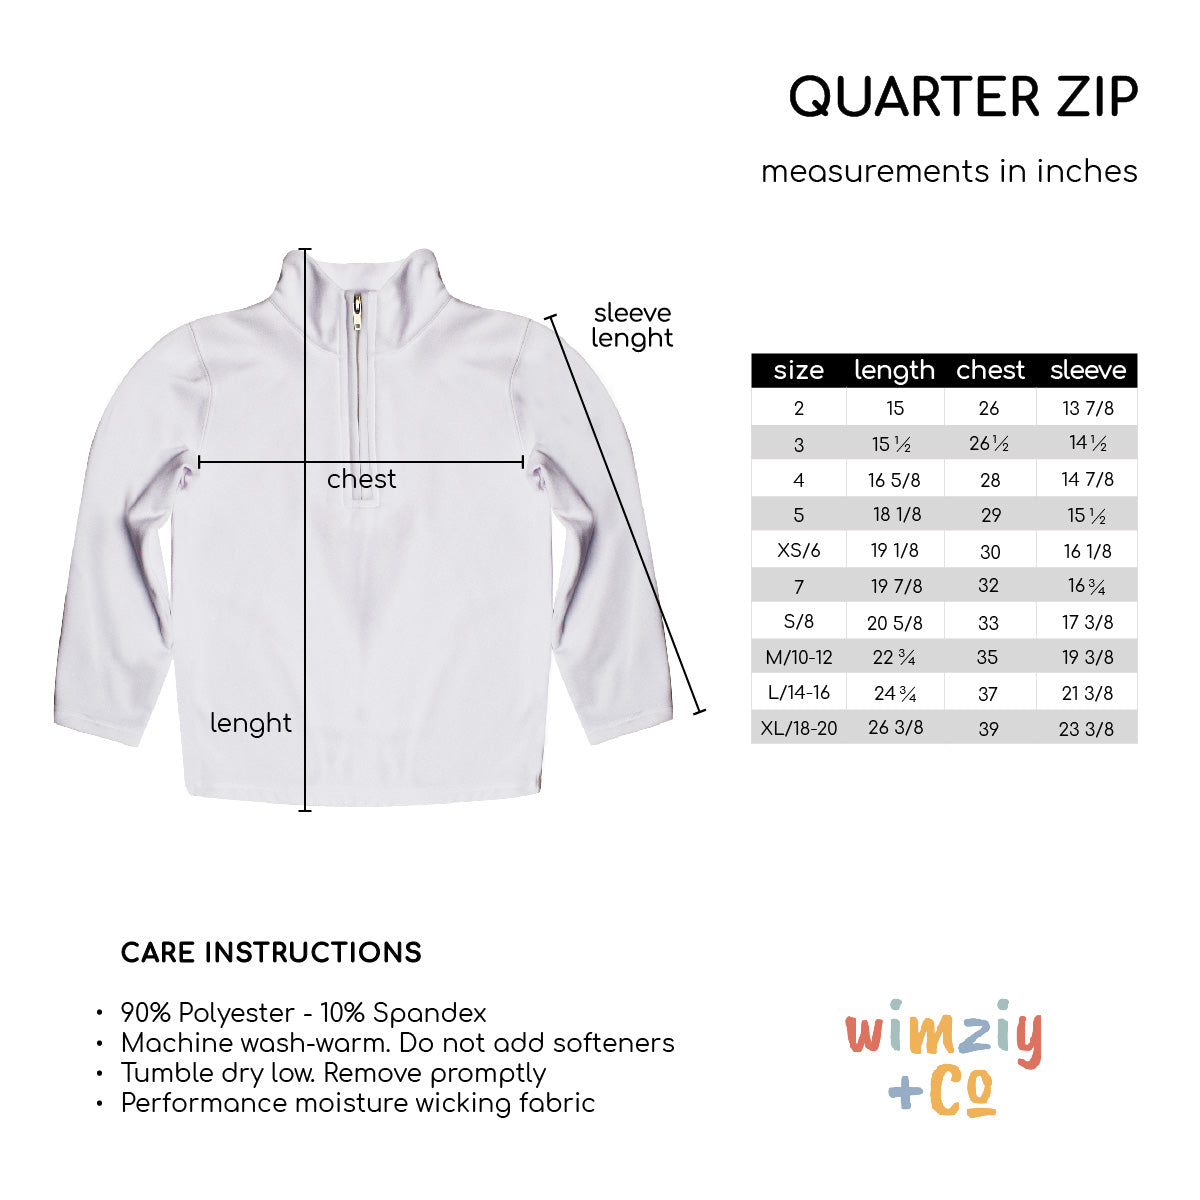 Camo and Stars Green Long Sleeve Quarter Zip - Wimziy&Co.